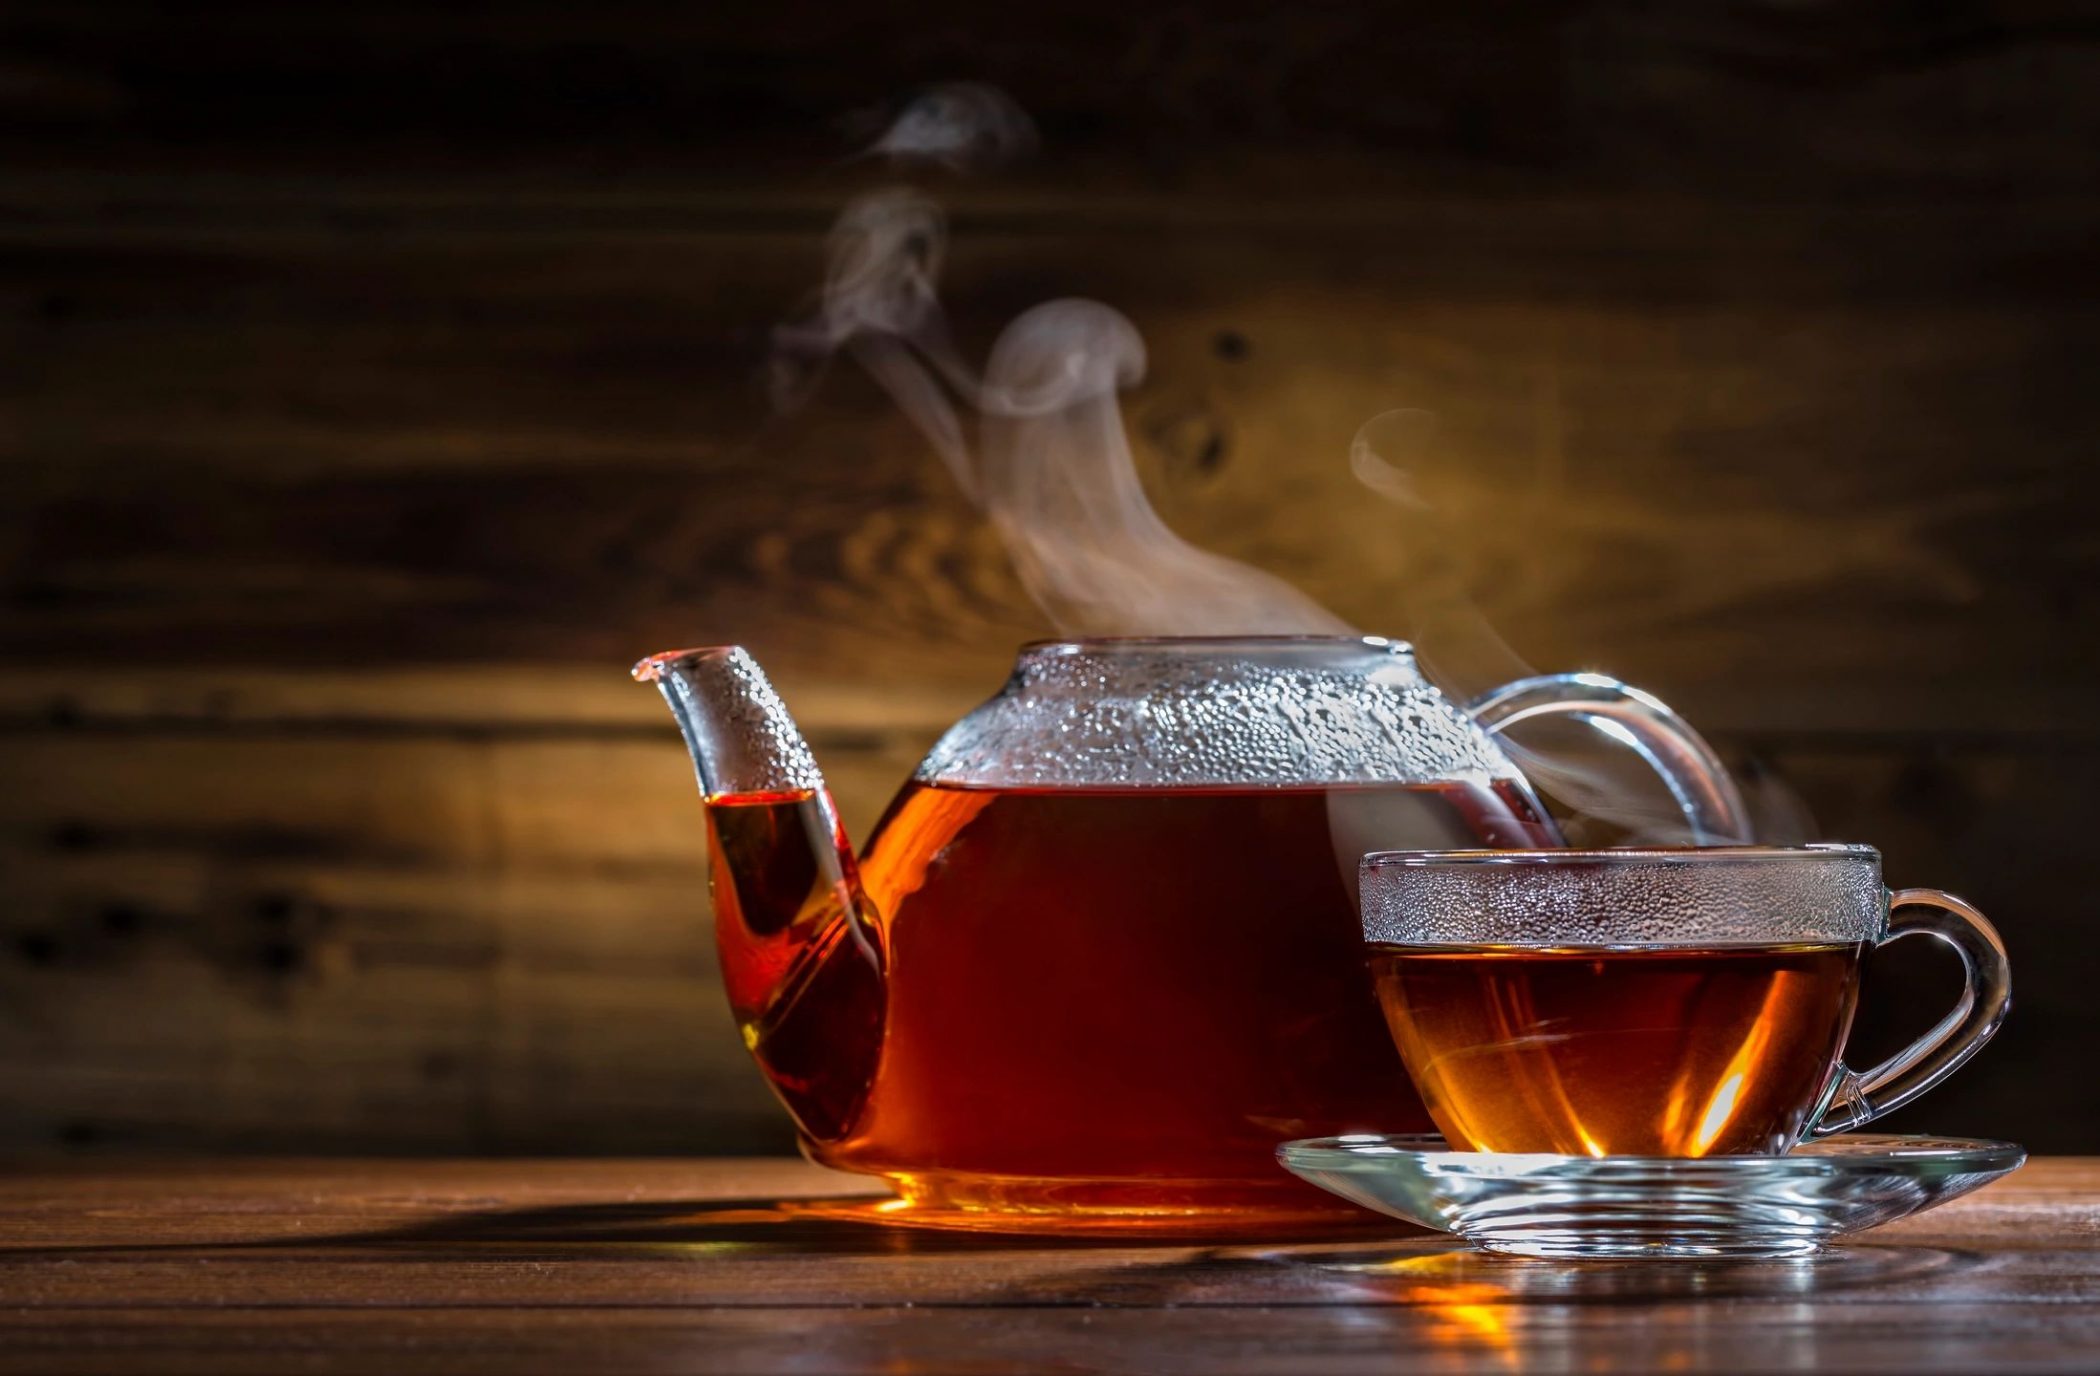 Steaming tea kettle used by DC widow blog writer Marjorie Brimley